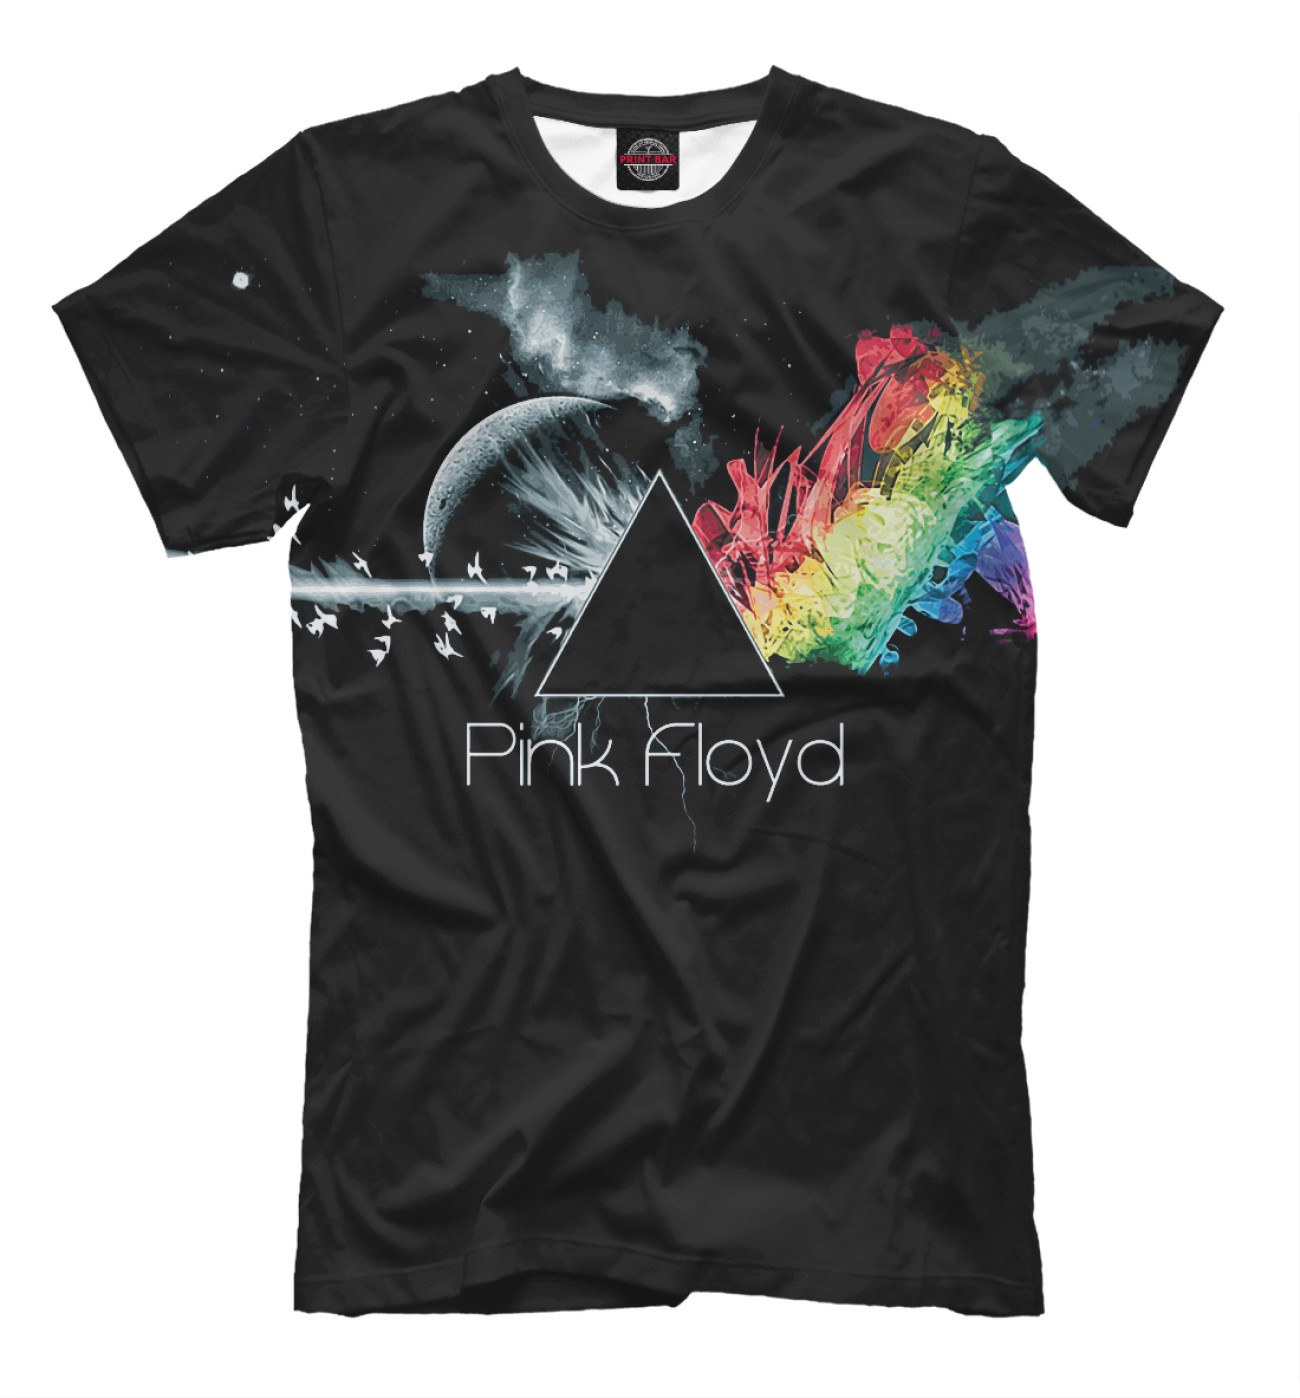 Мужская Футболка Pink Floyd, артикул: PFL-941107-fut-2